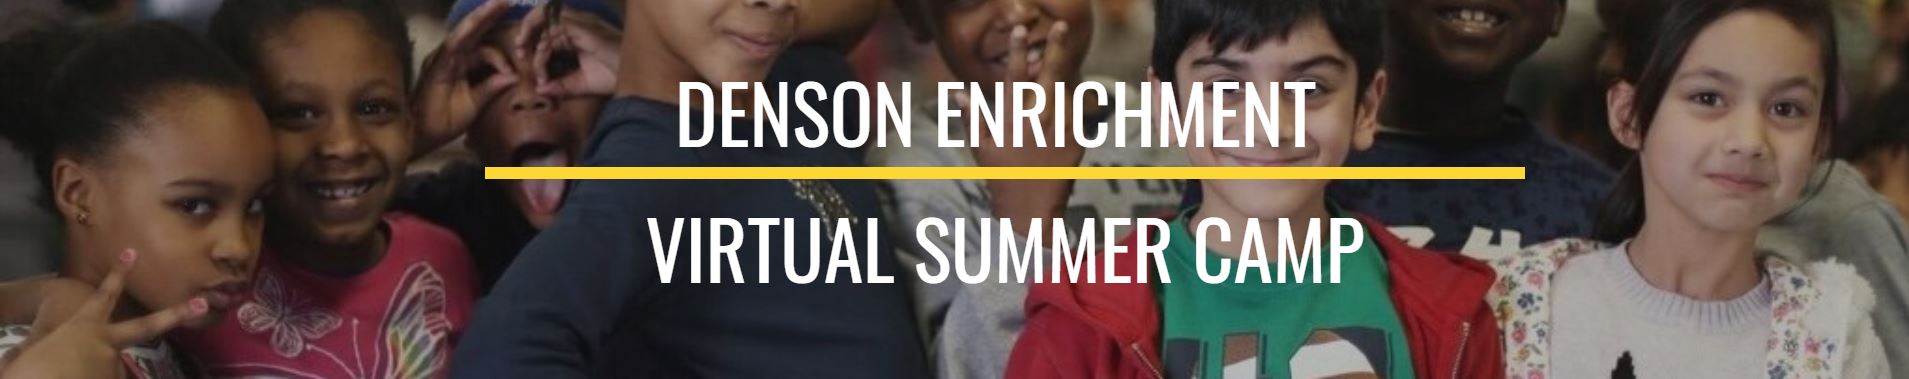 Denson Enrichment Virtual Learning Camp